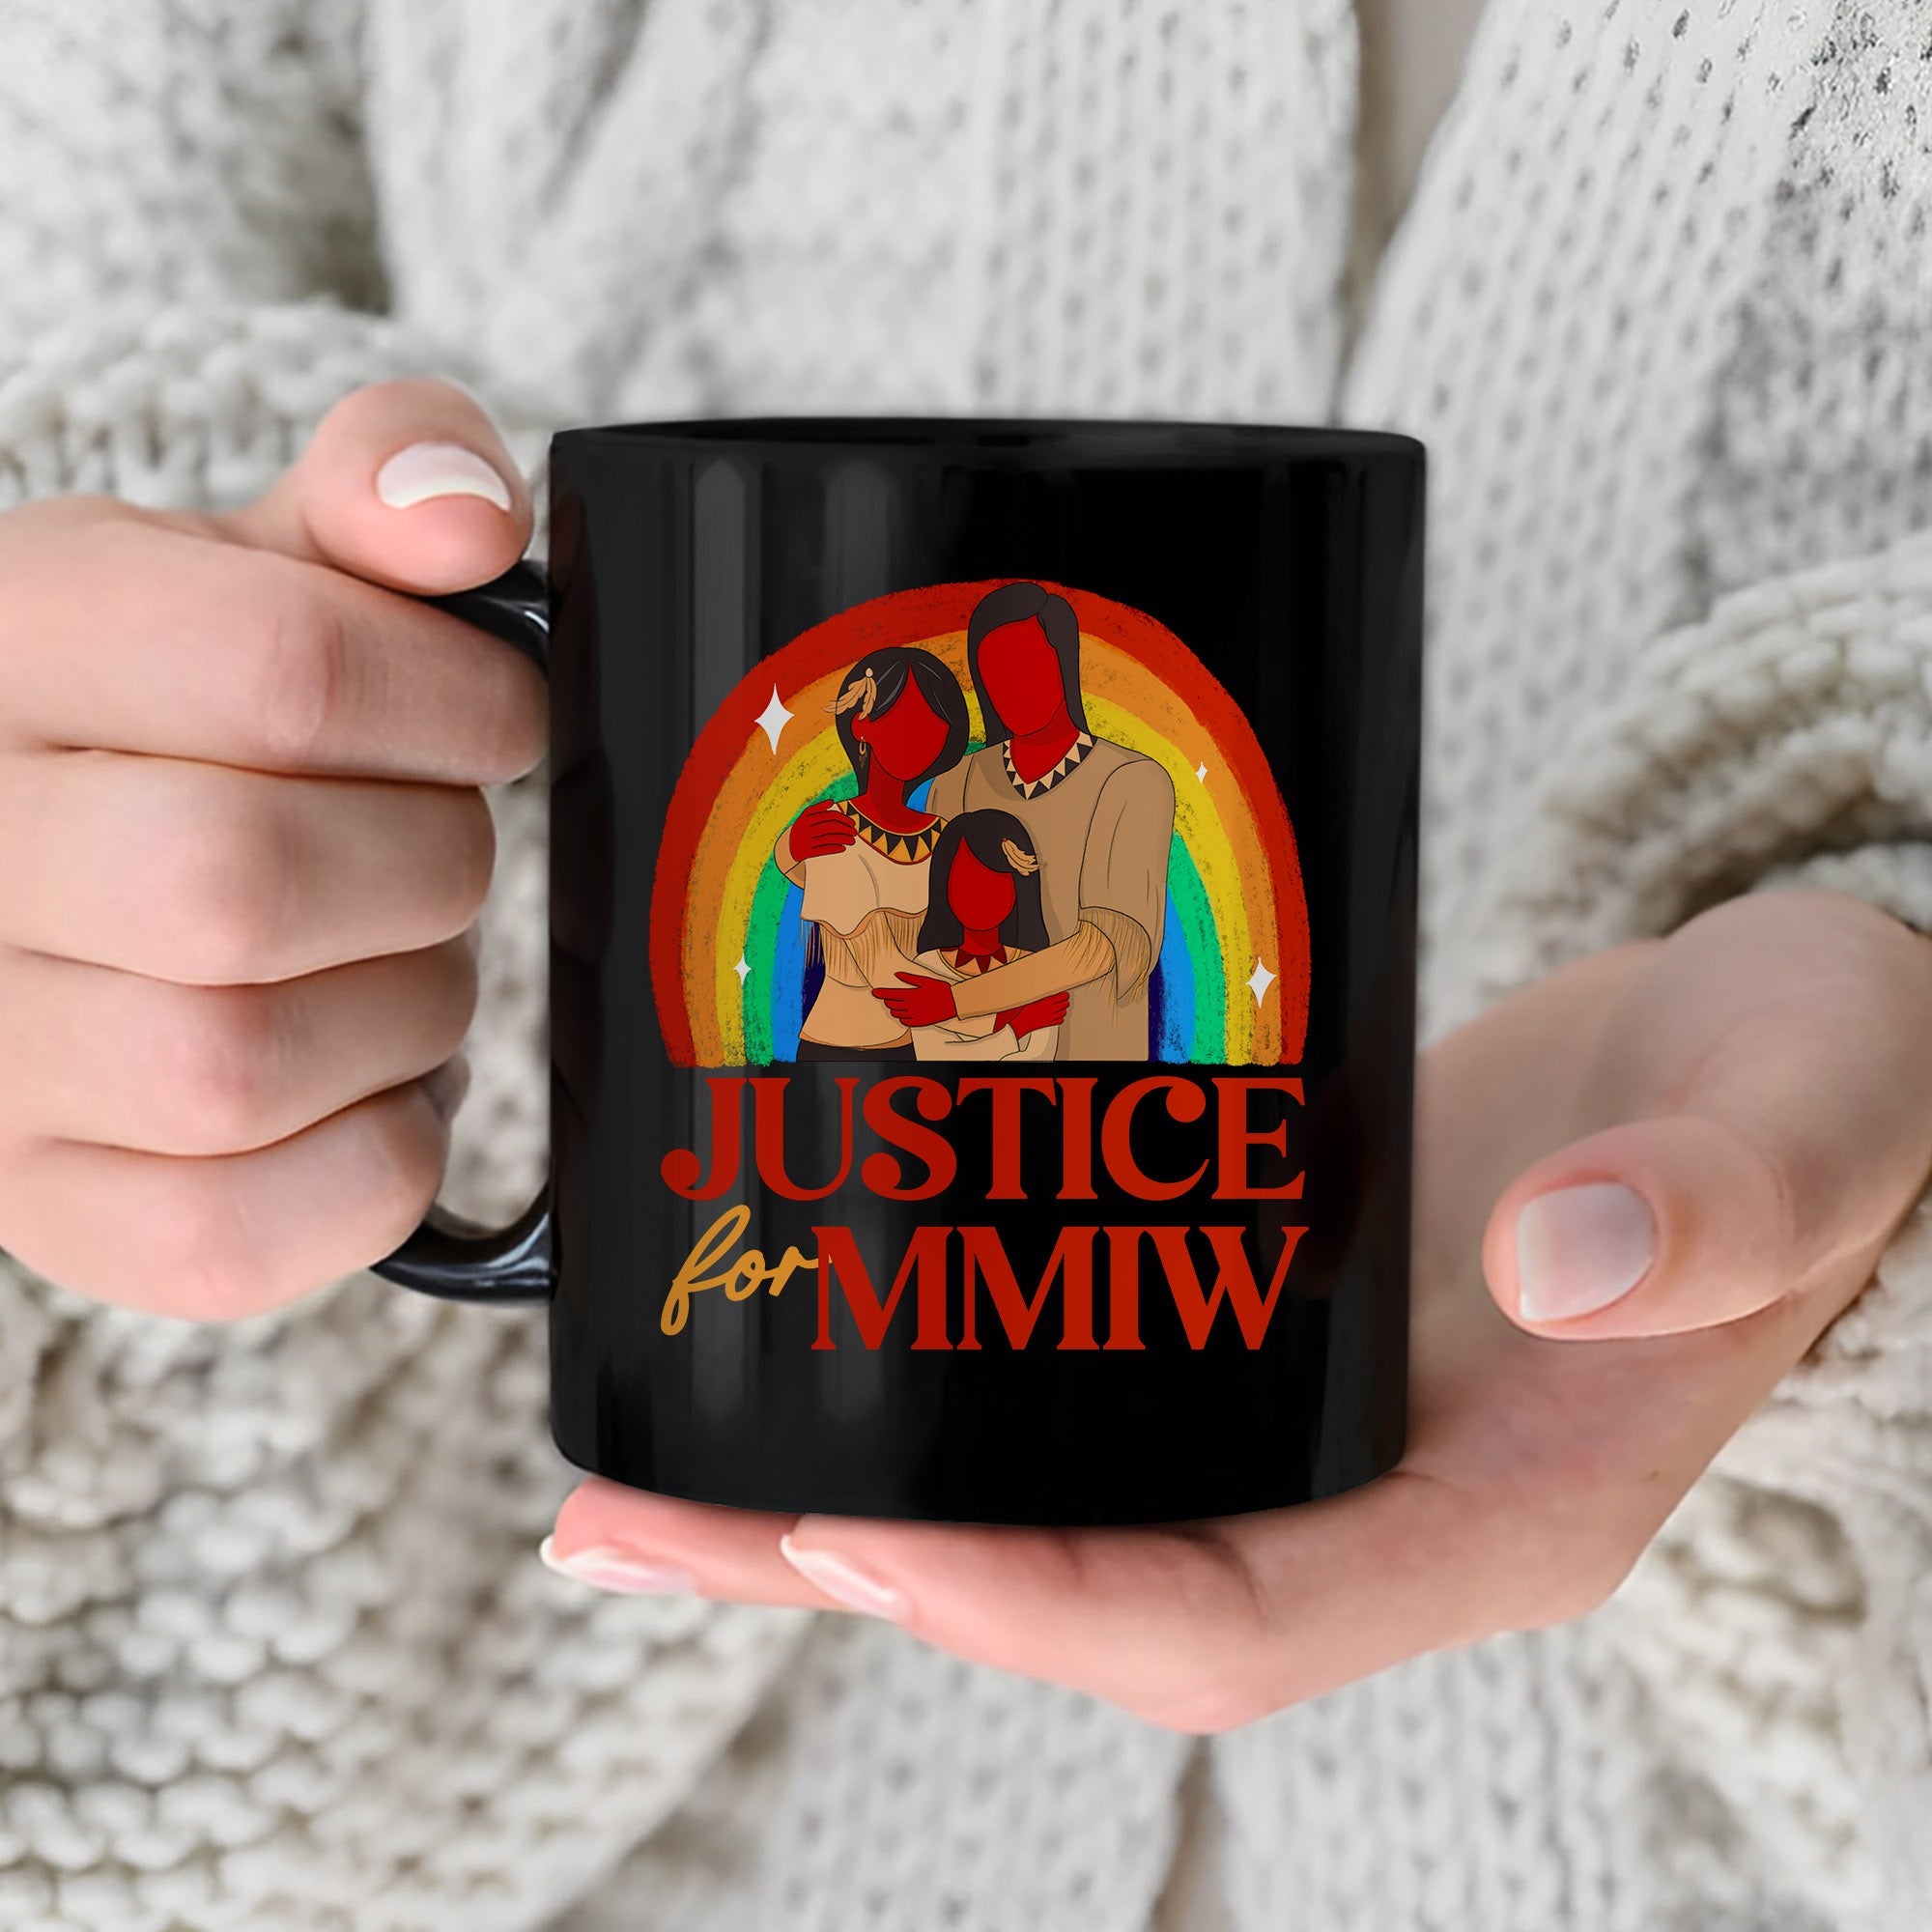 Justice For MMIW Ceramic Coffee Mug 009